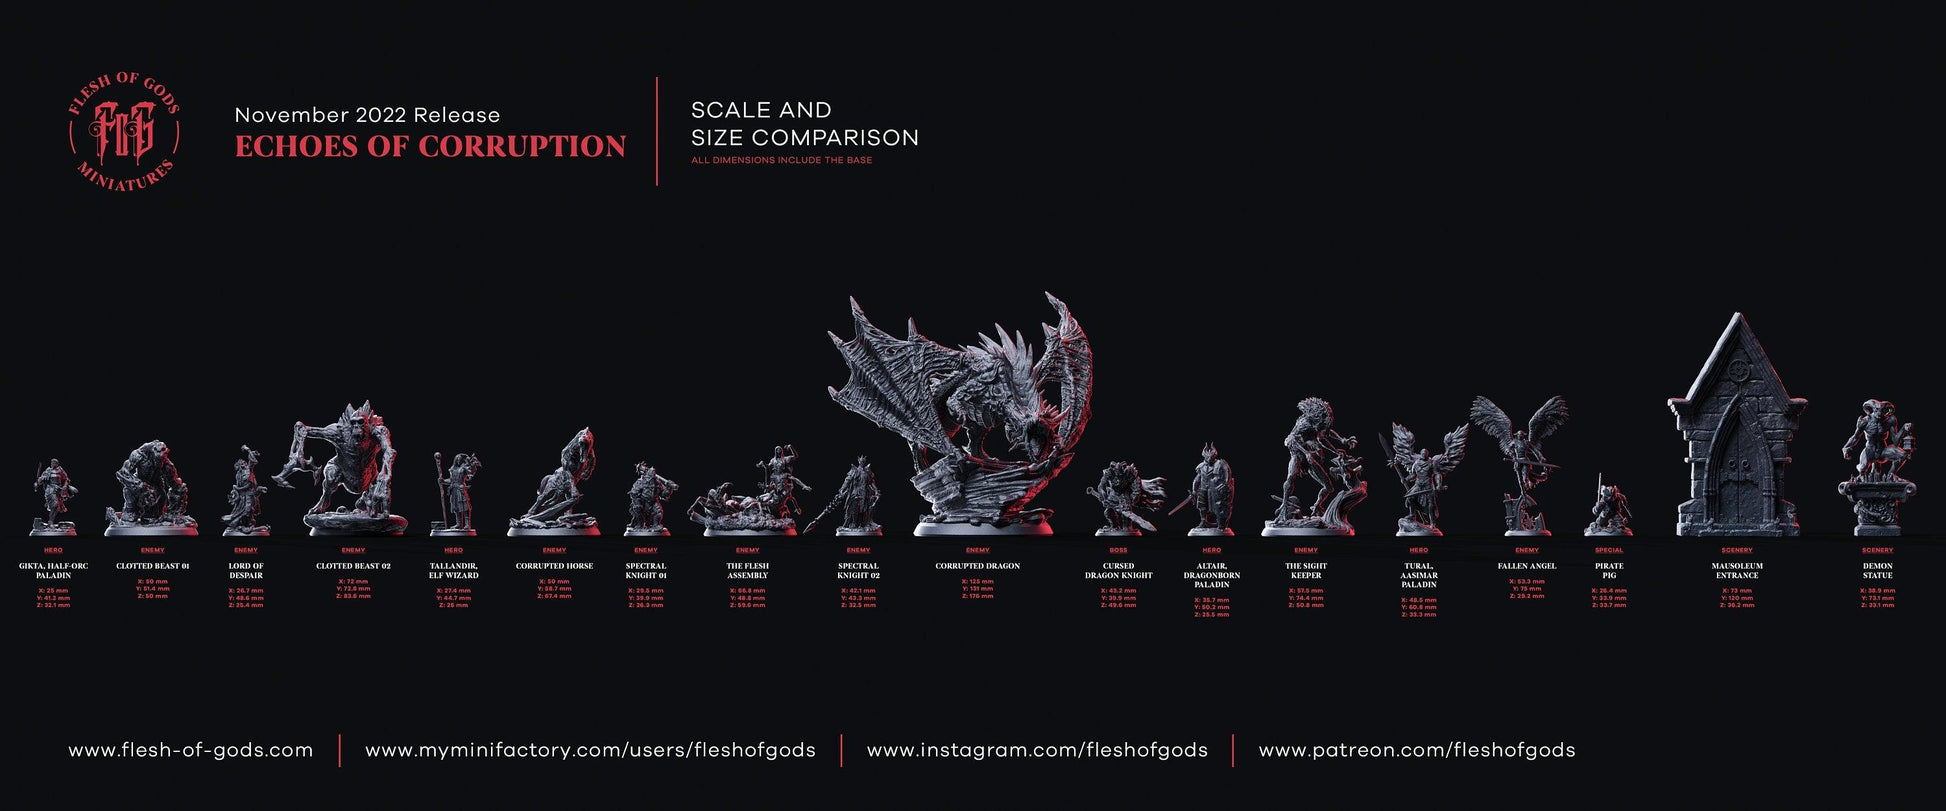 Spectral Knight Miniature | Eerie DnD Phantom Warrior Figure | 32mm Scale - Plague Miniatures shop for DnD Miniatures